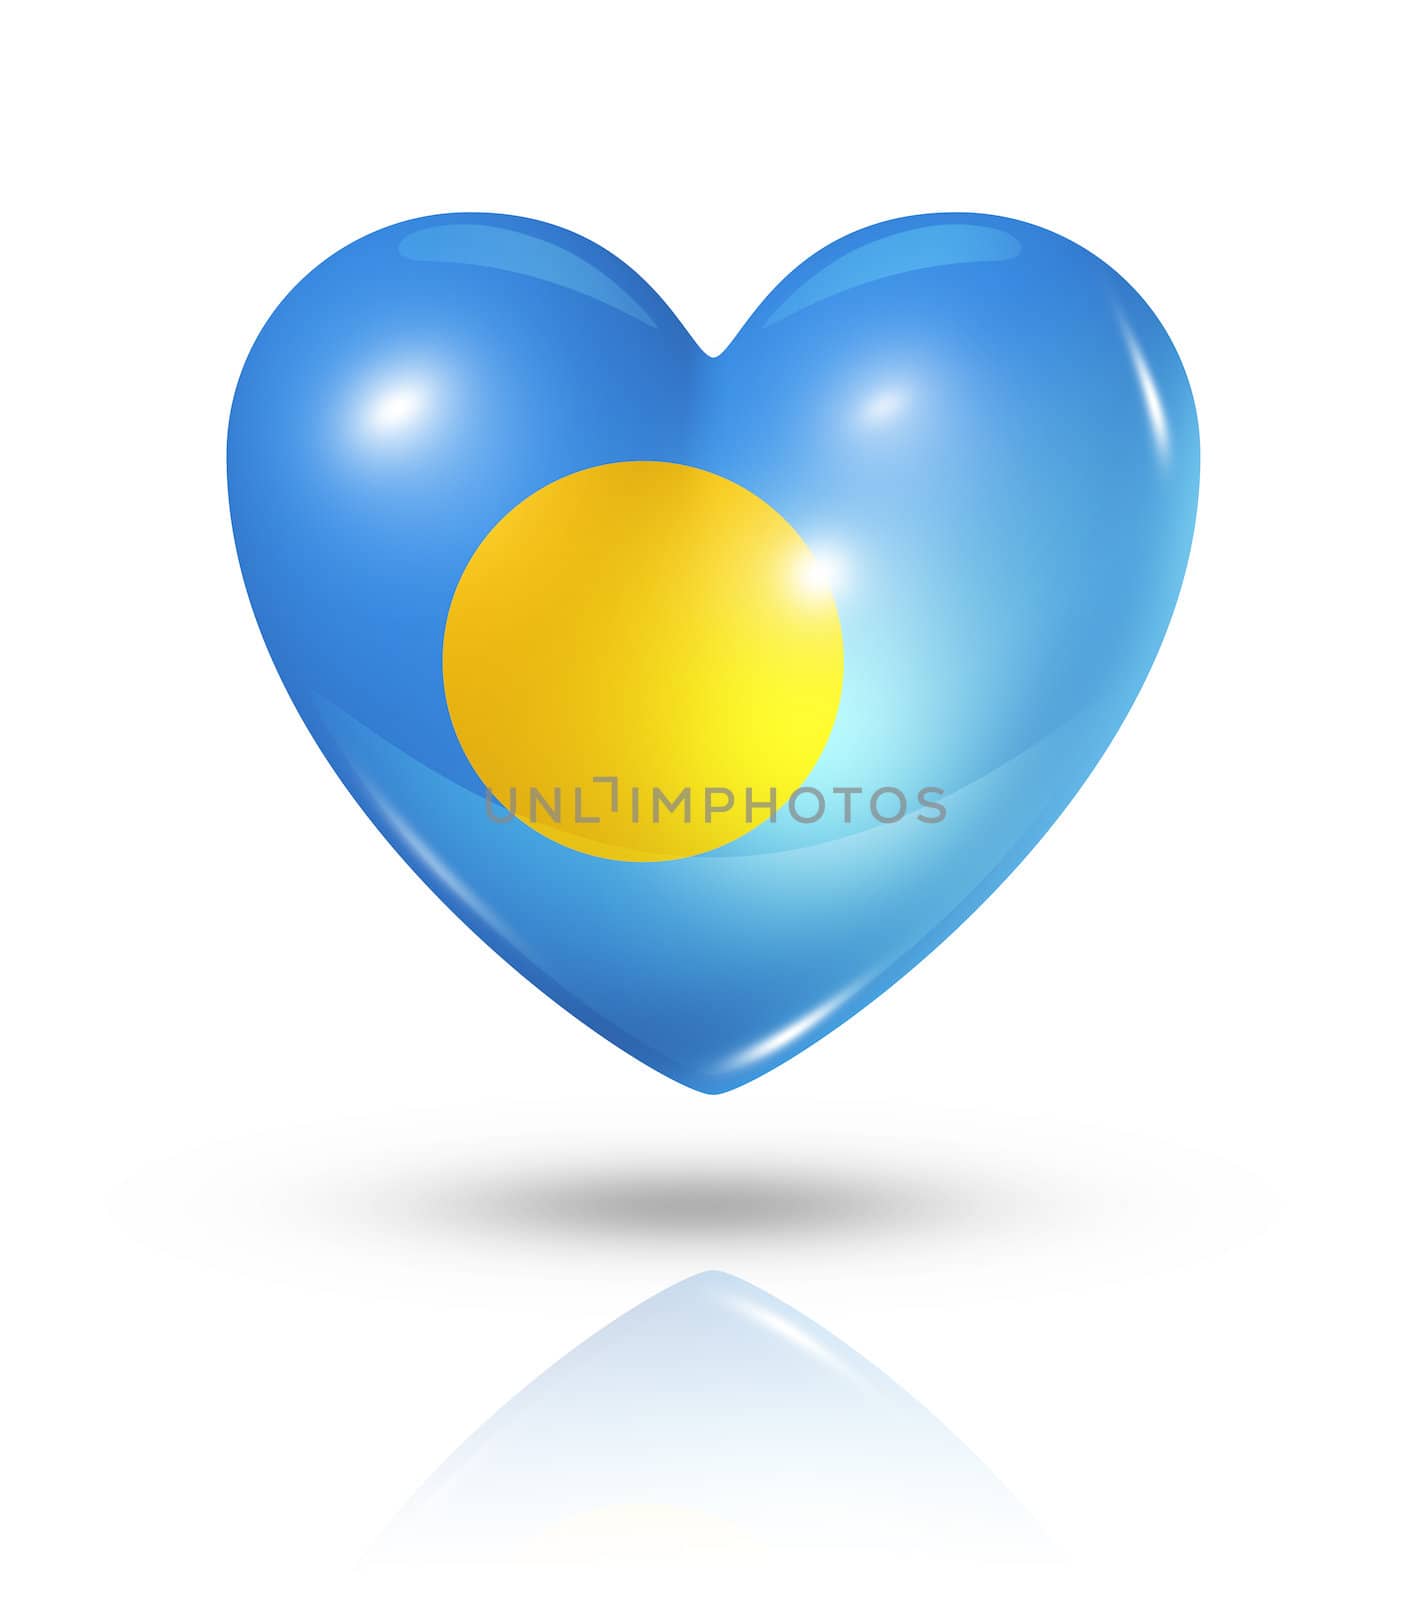 Love Palau, heart flag icon by daboost